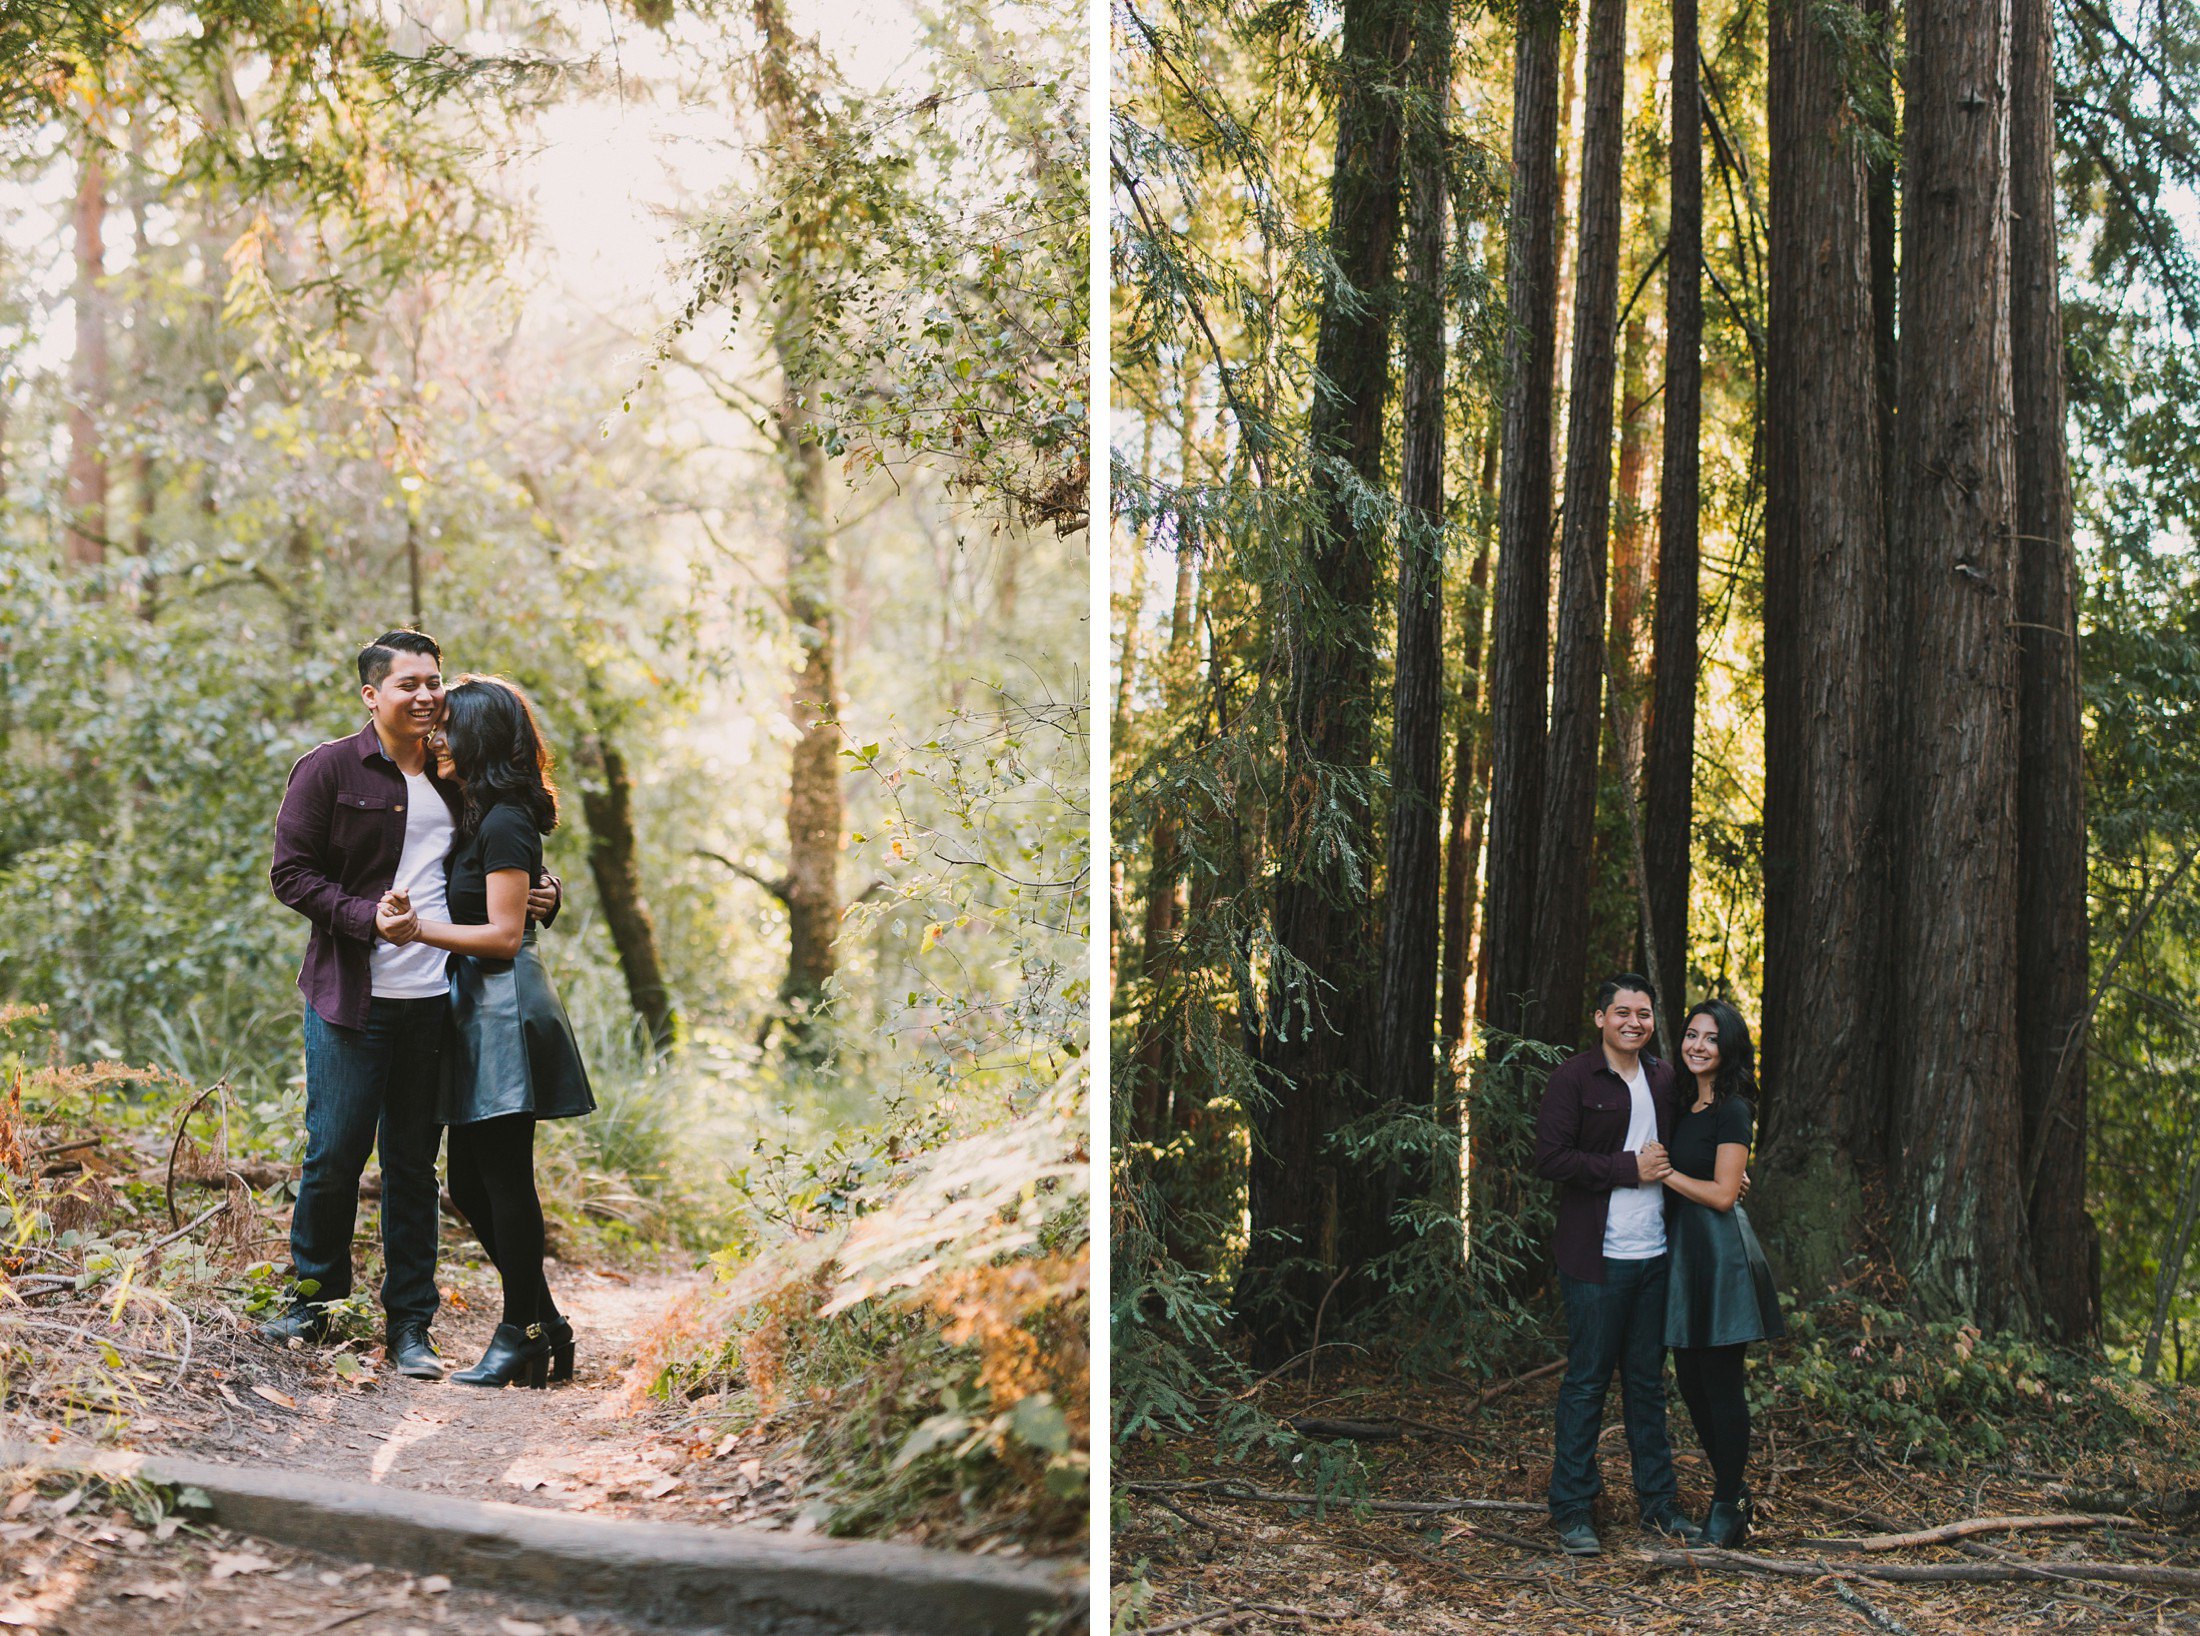 Engagement photos among redwood trees